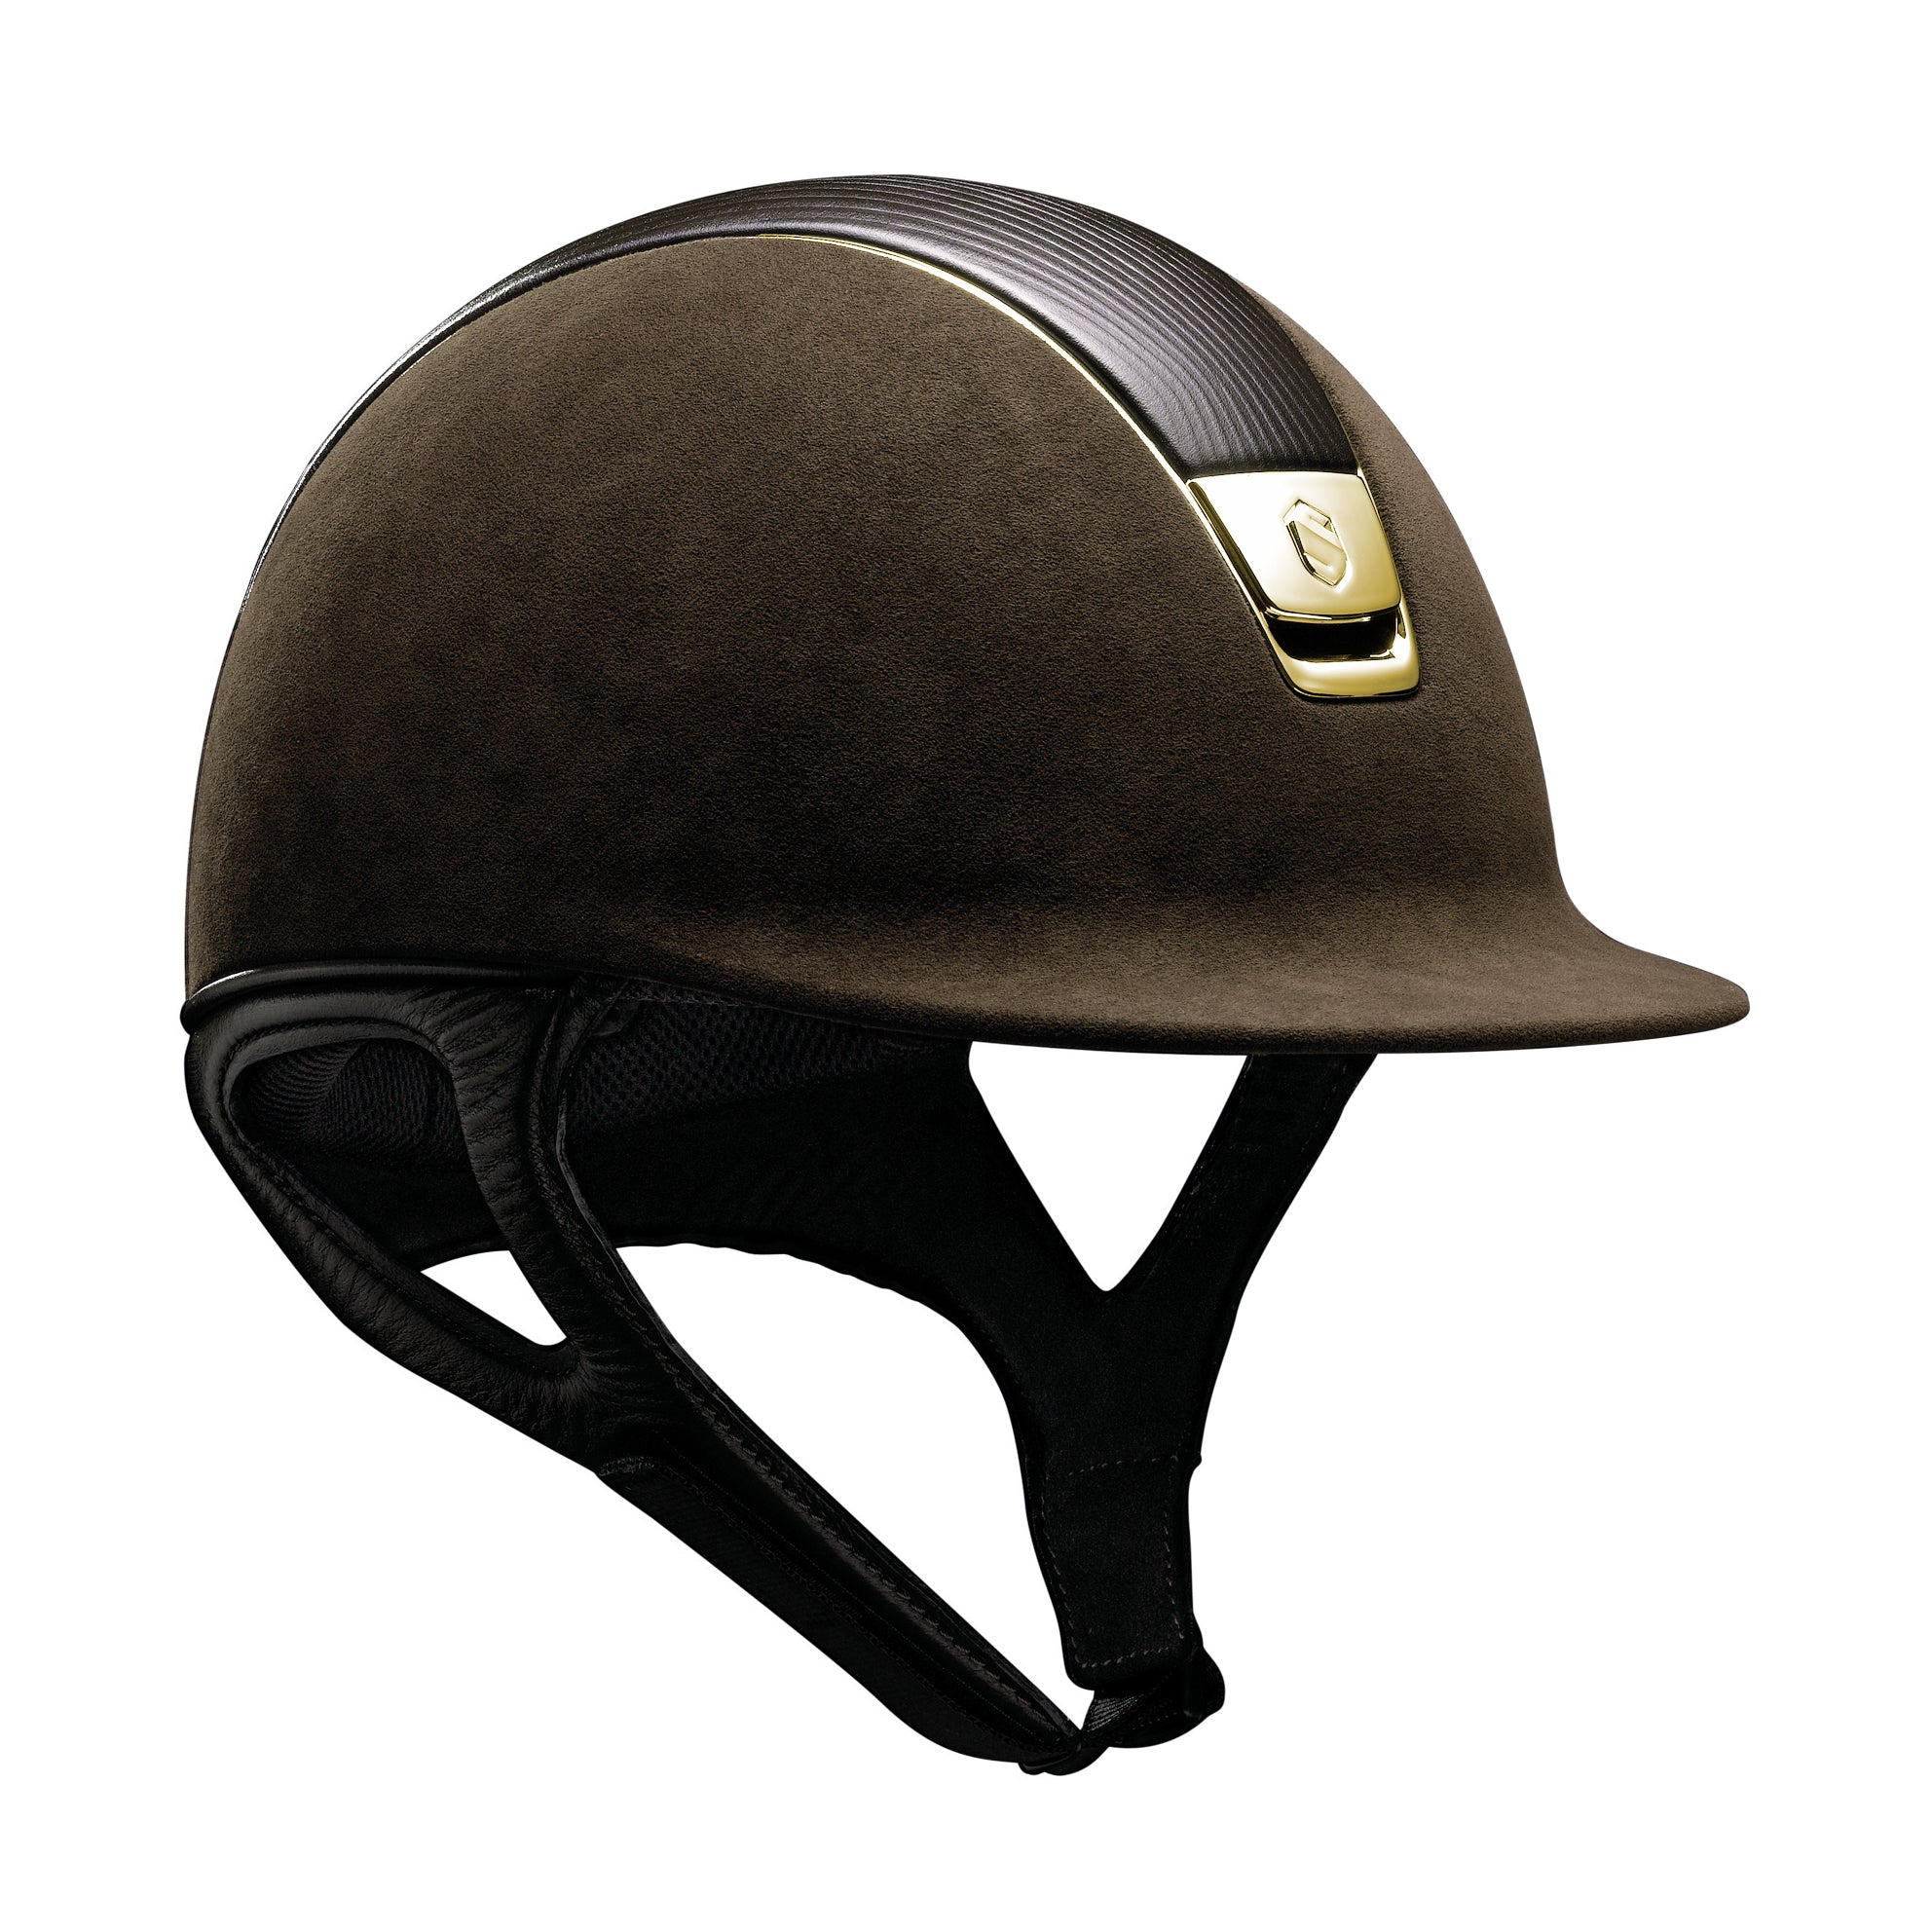 Samshield 2.0 Premium Helmet